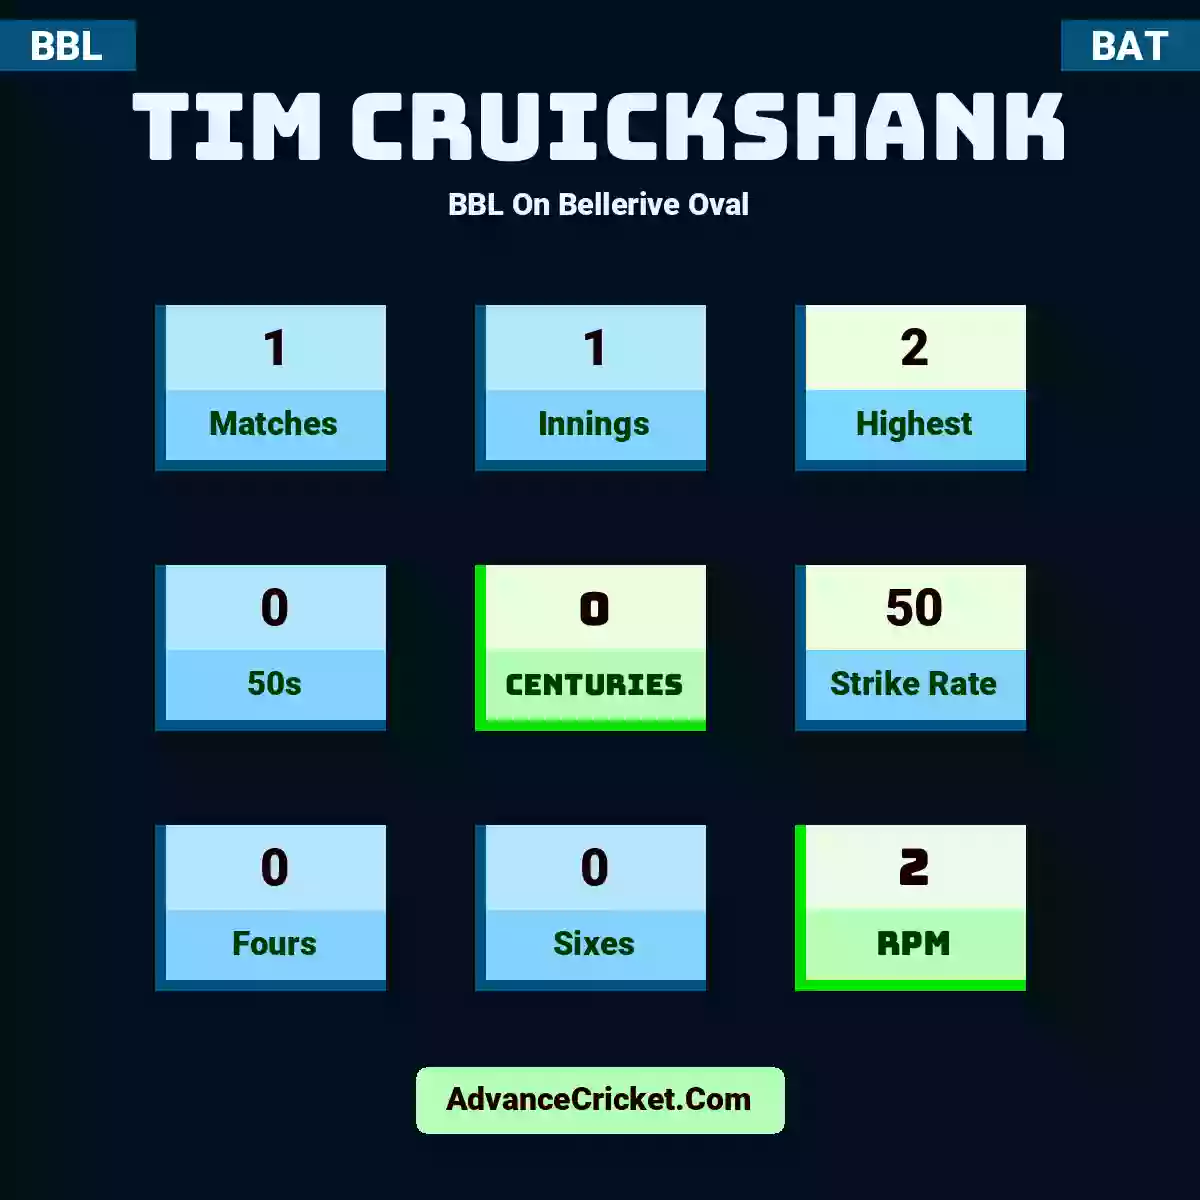 Tim Cruickshank BBL  On Bellerive Oval, Tim Cruickshank played 1 matches, scored 2 runs as highest, 0 half-centuries, and 0 centuries, with a strike rate of 50. T.Cruickshank hit 0 fours and 0 sixes, with an RPM of 2.